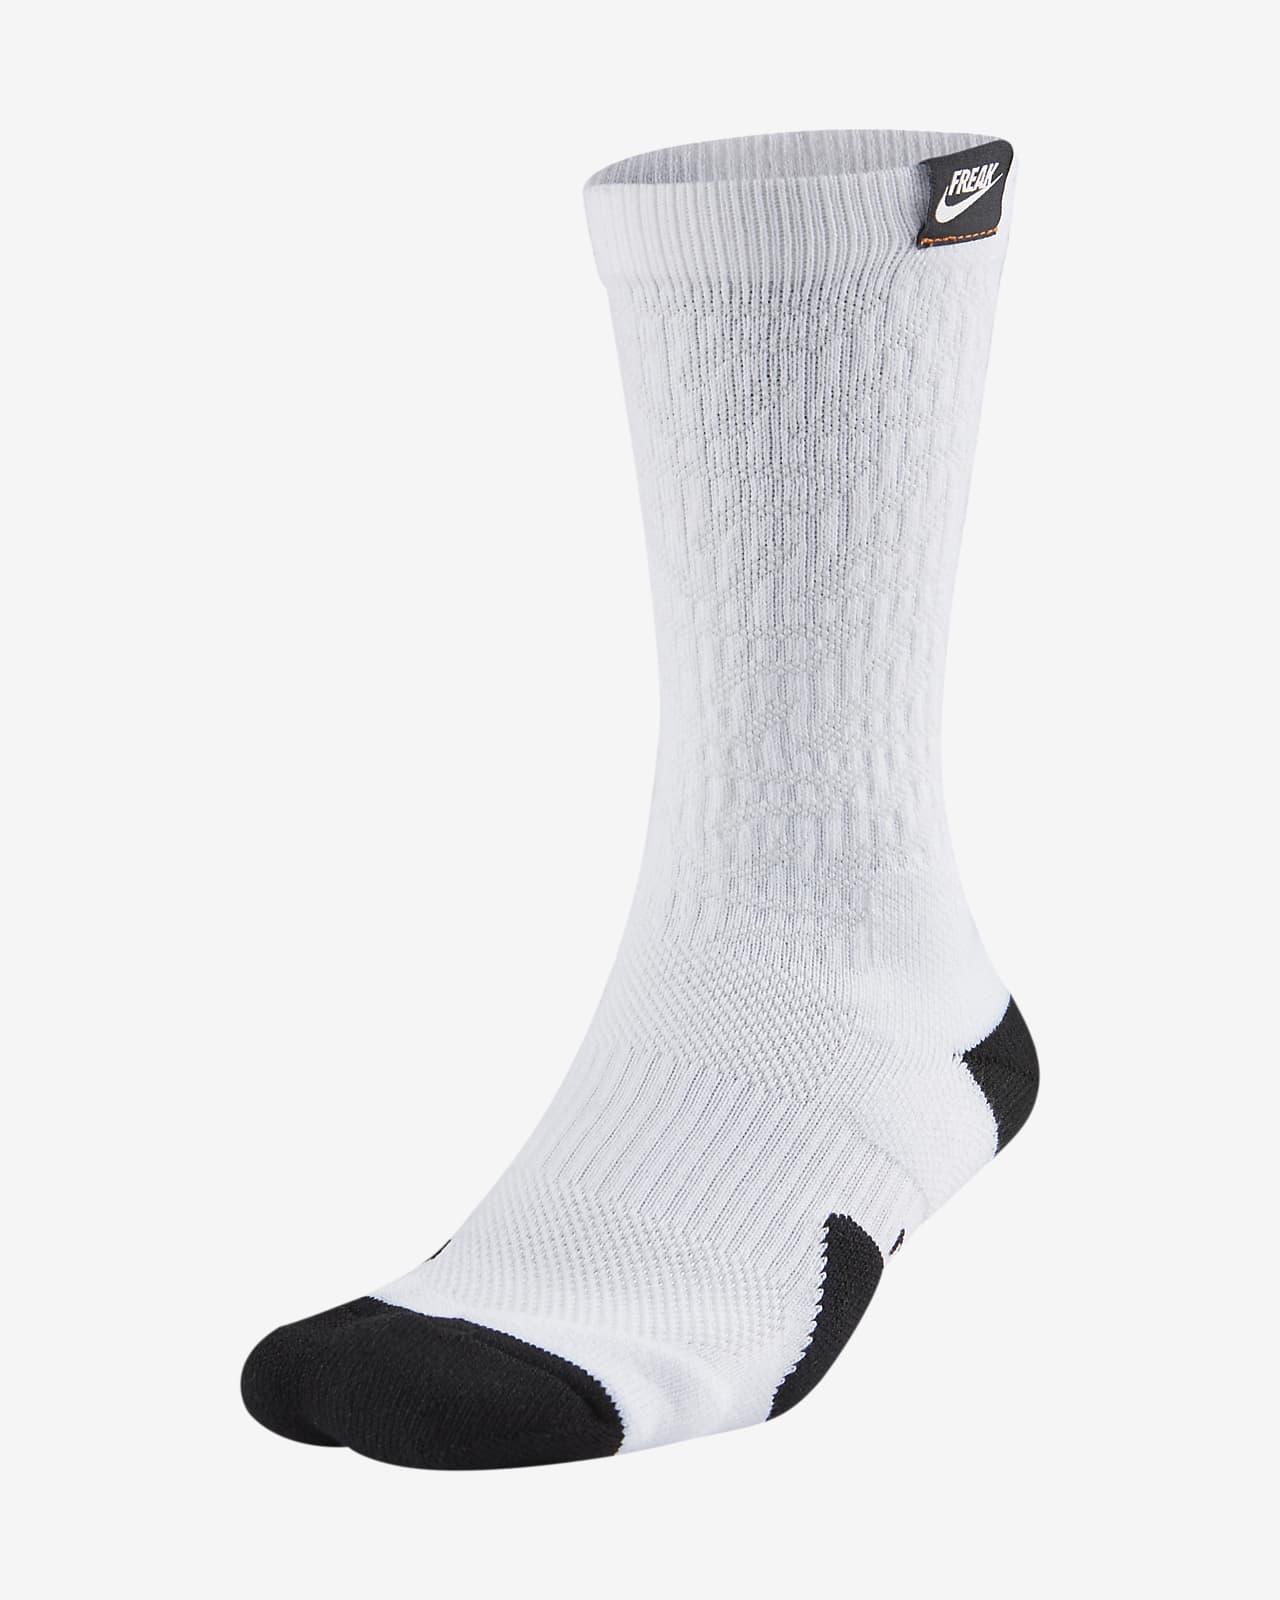 nike elite socks designs